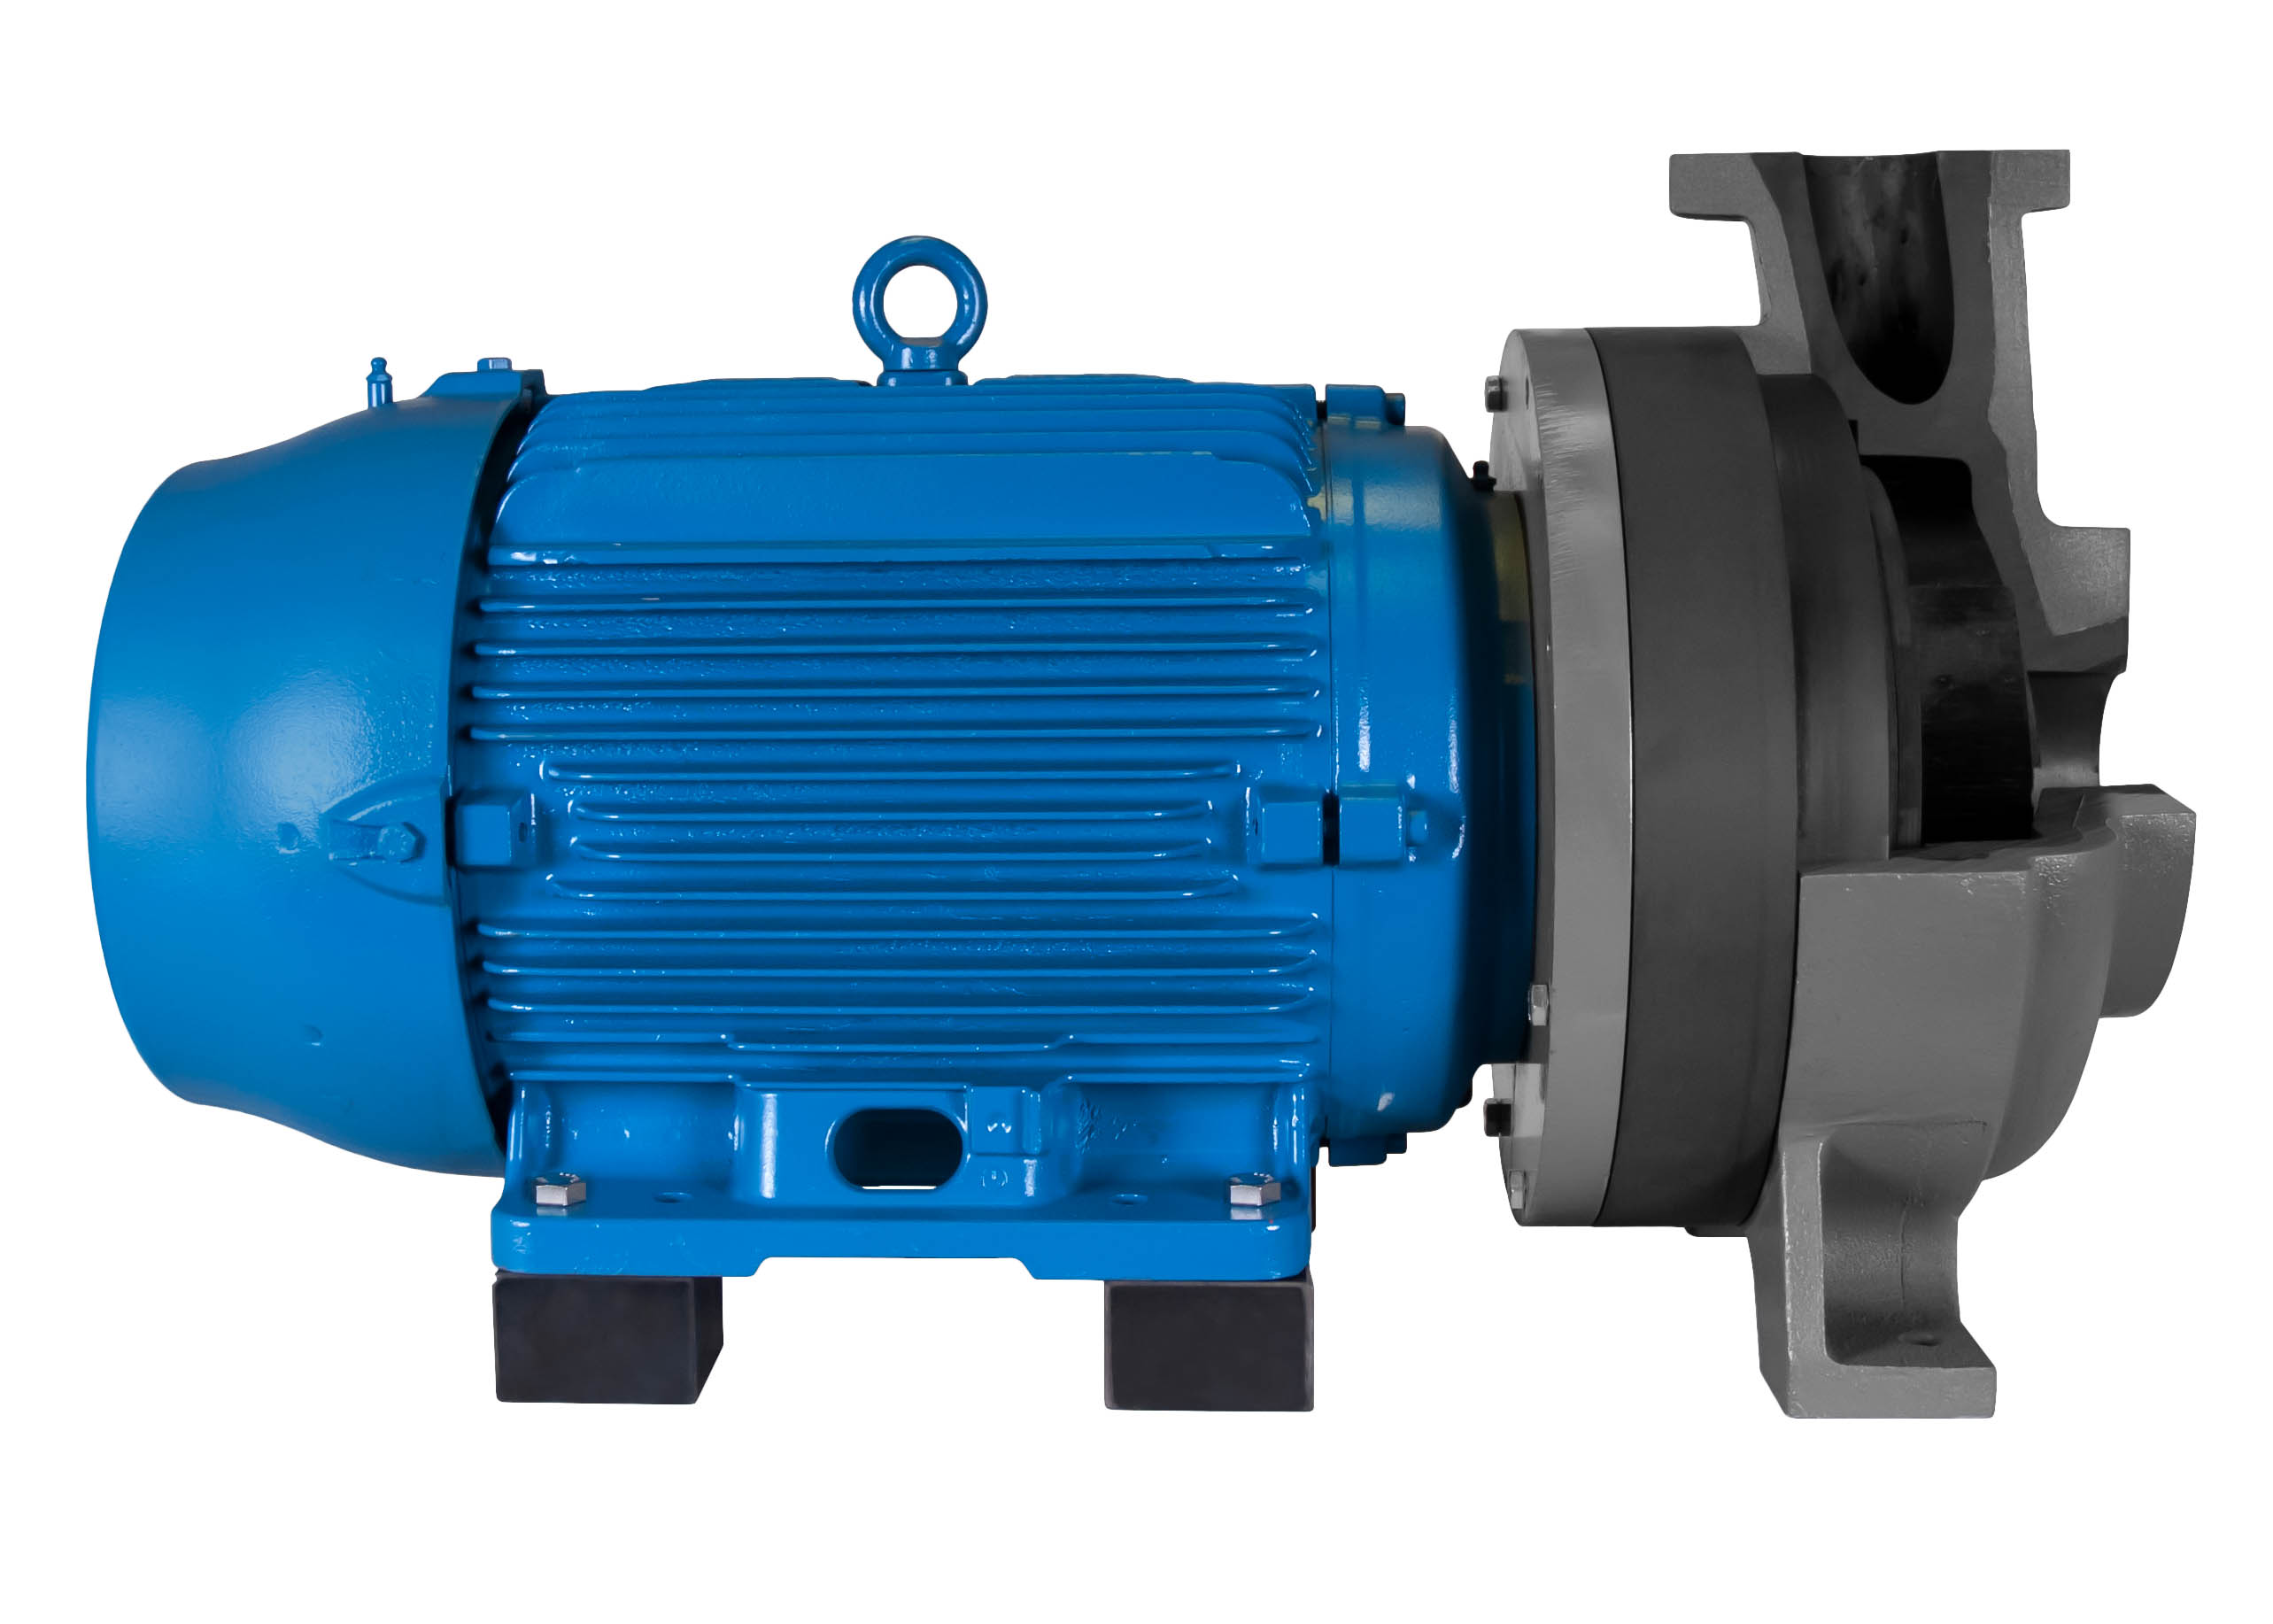 C-Shell 3x2-10 Pump cutaway with blue WEG Motor left side view